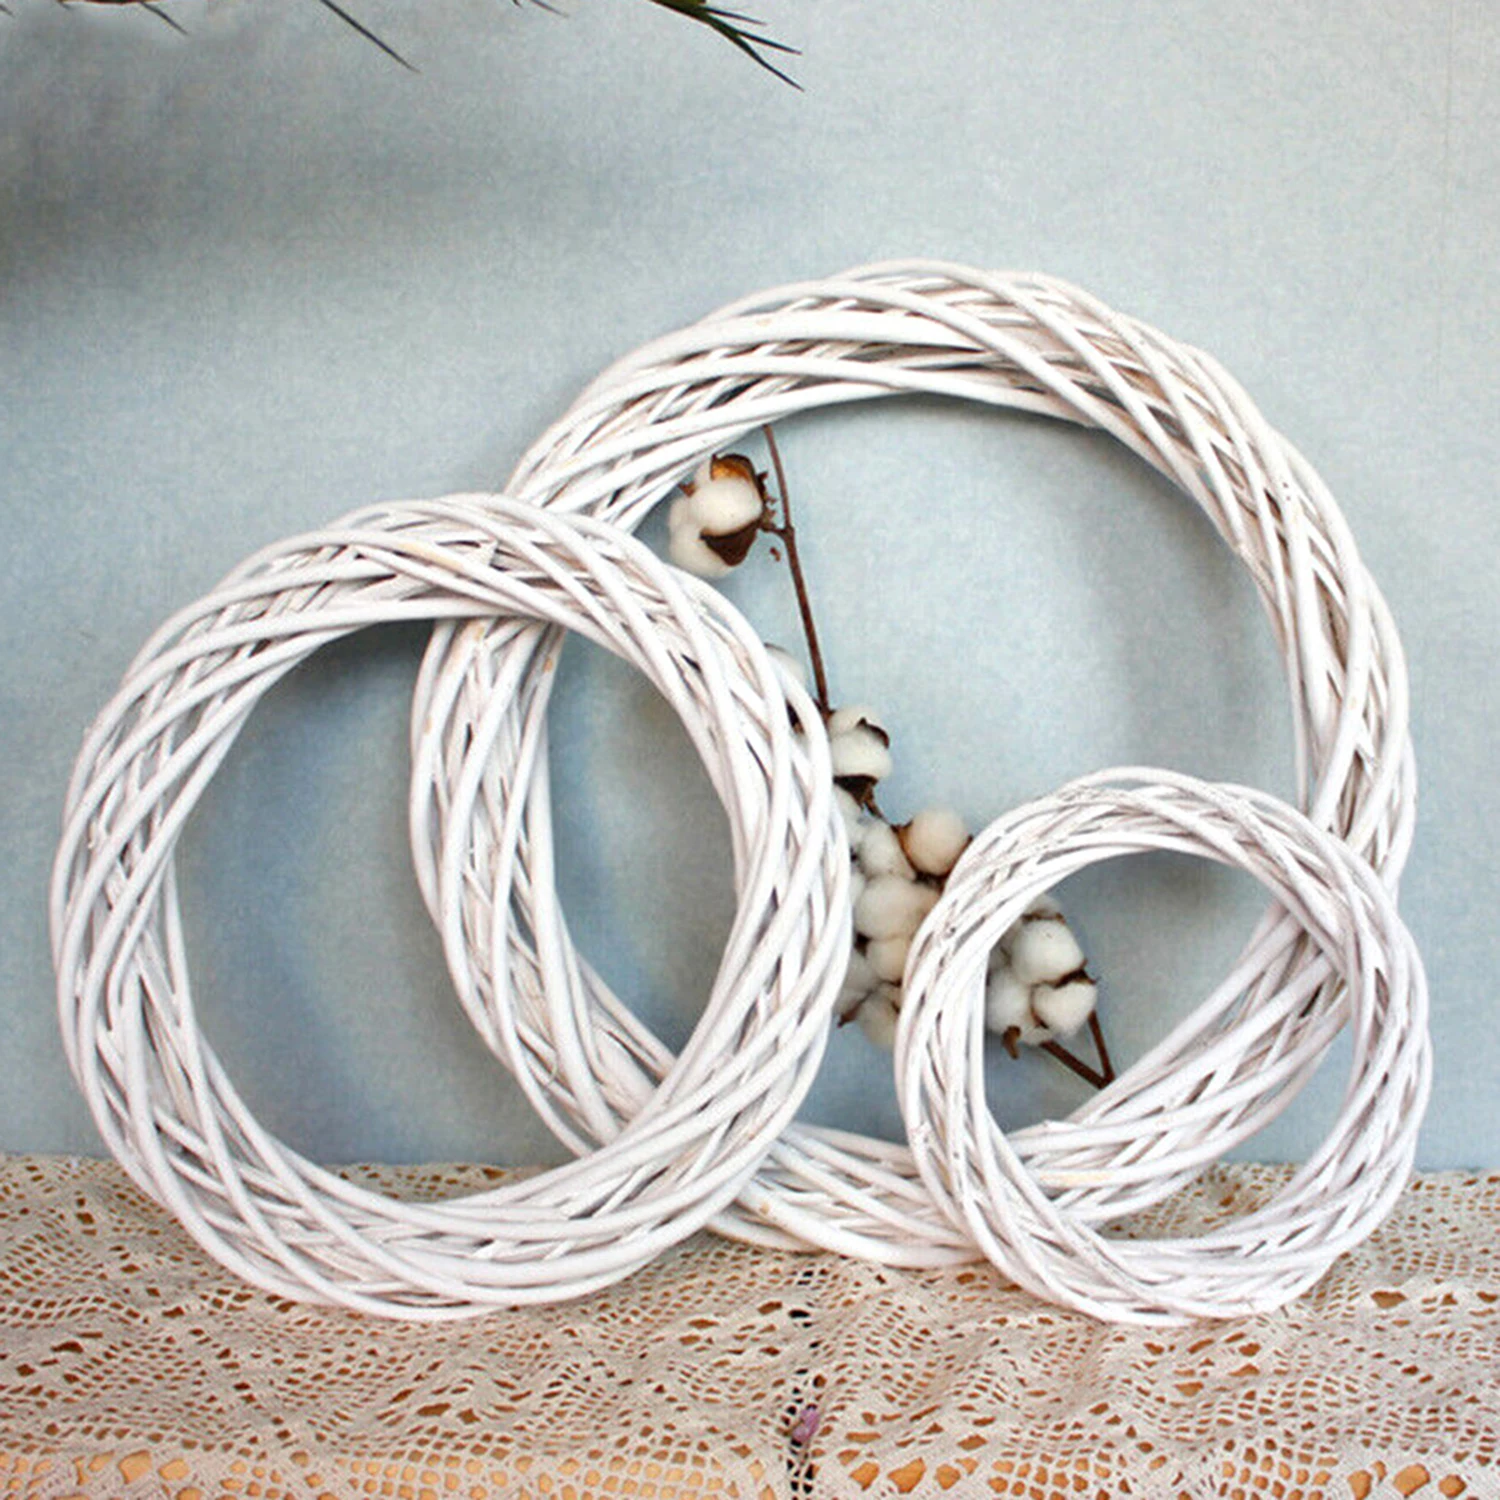 10-30cm Wicker Garland Hanging Heart Shaped Wreath Festive Rattan Ring Decor 